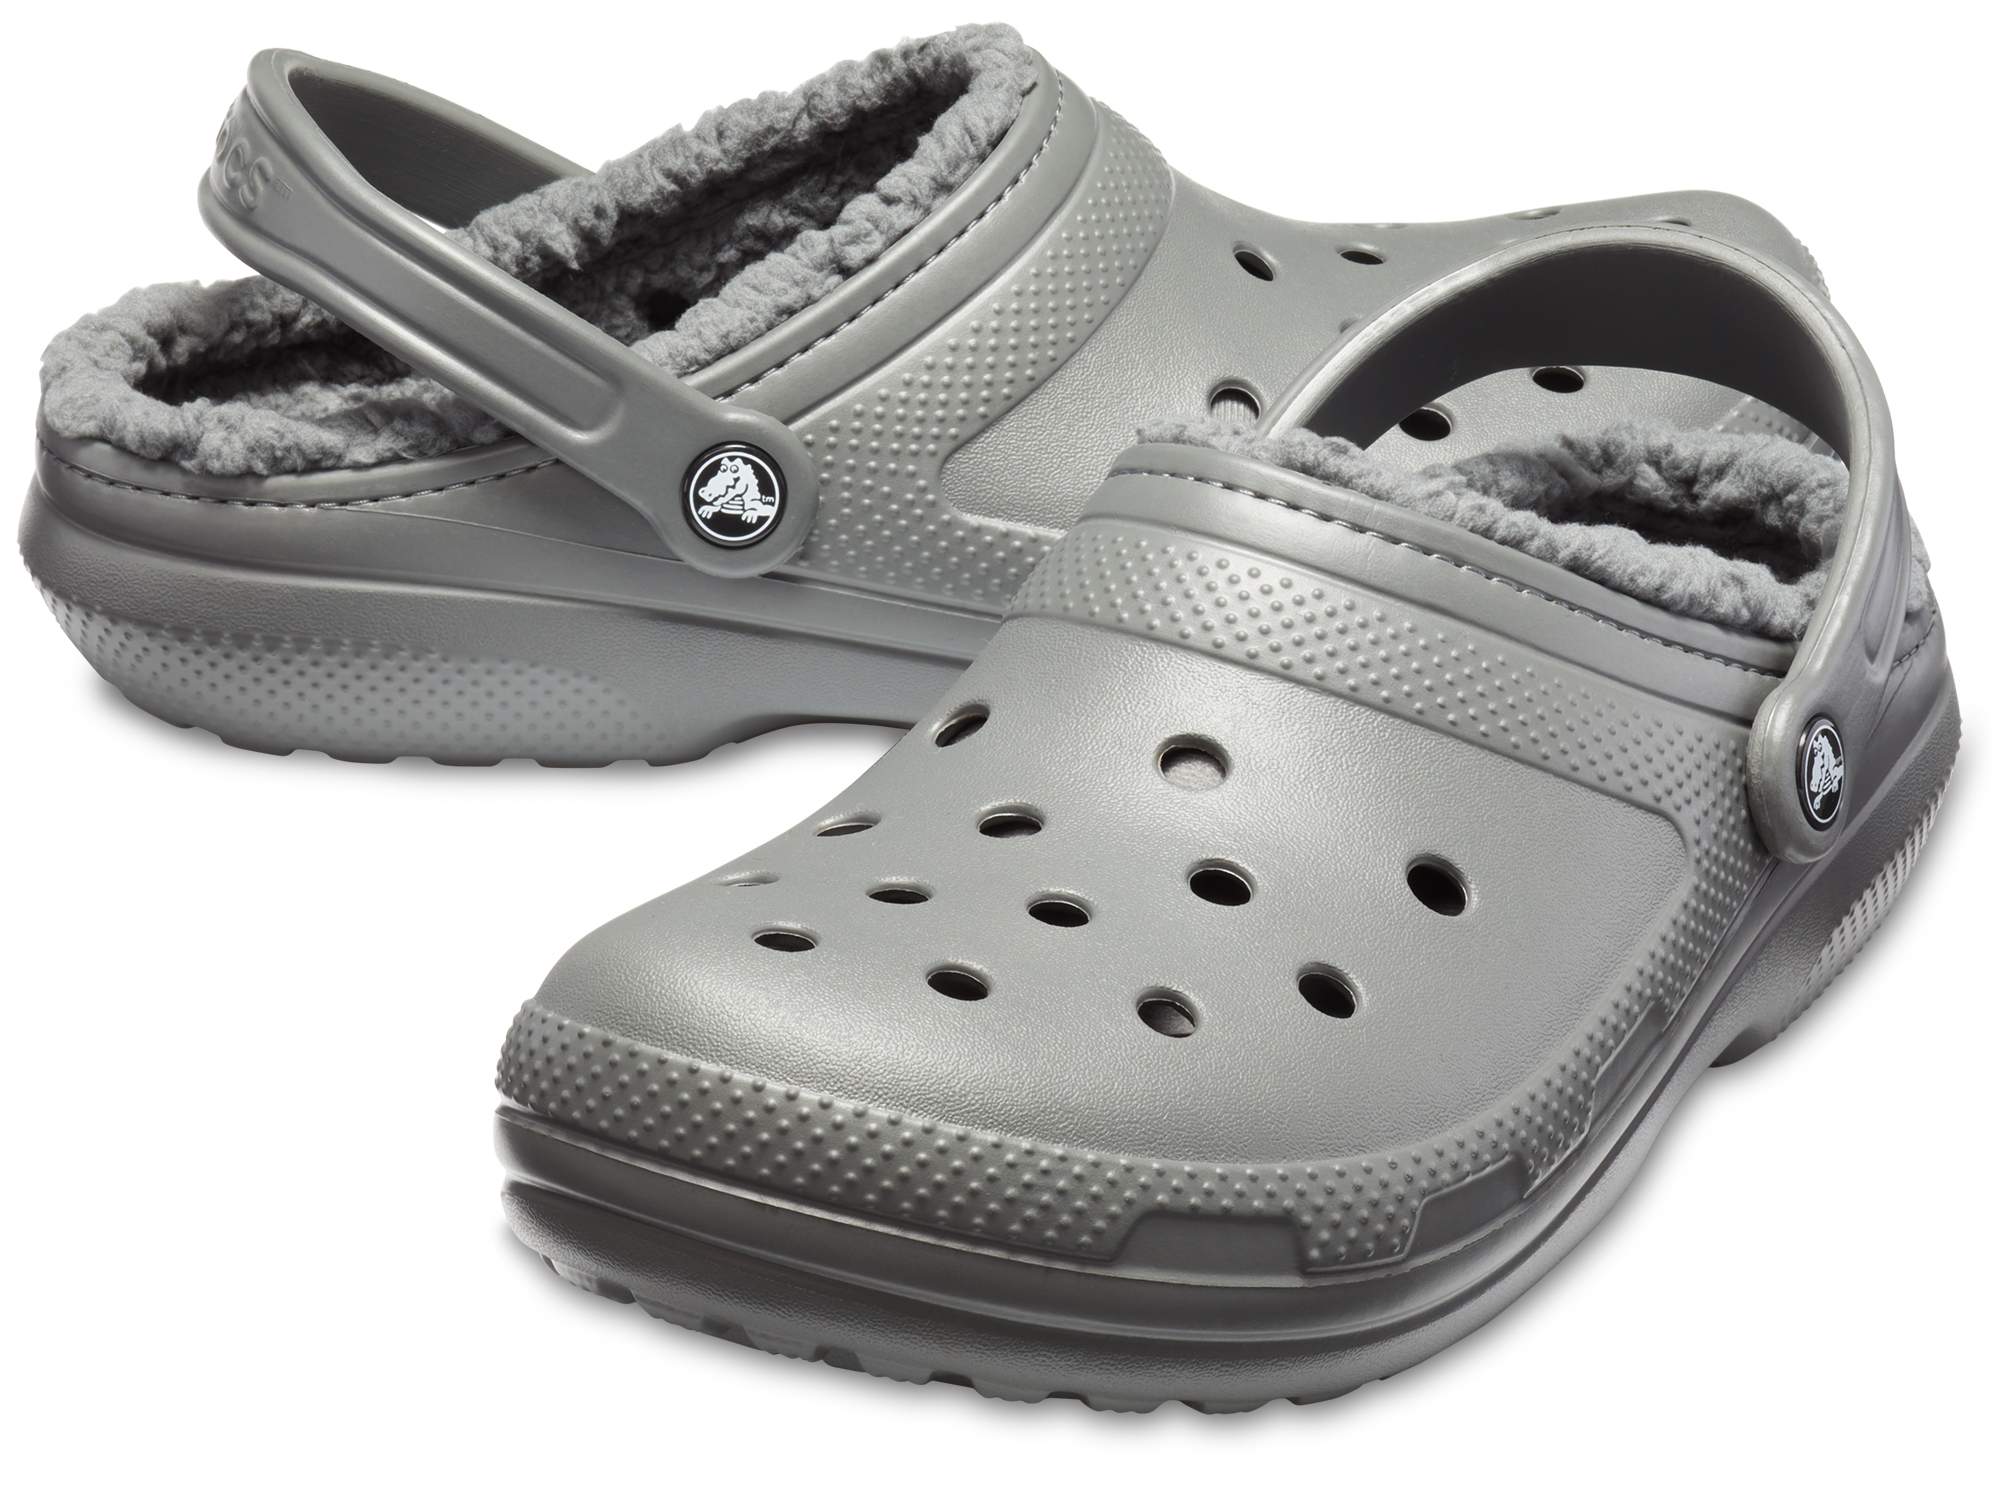 Classic Lined Clog - Crocs